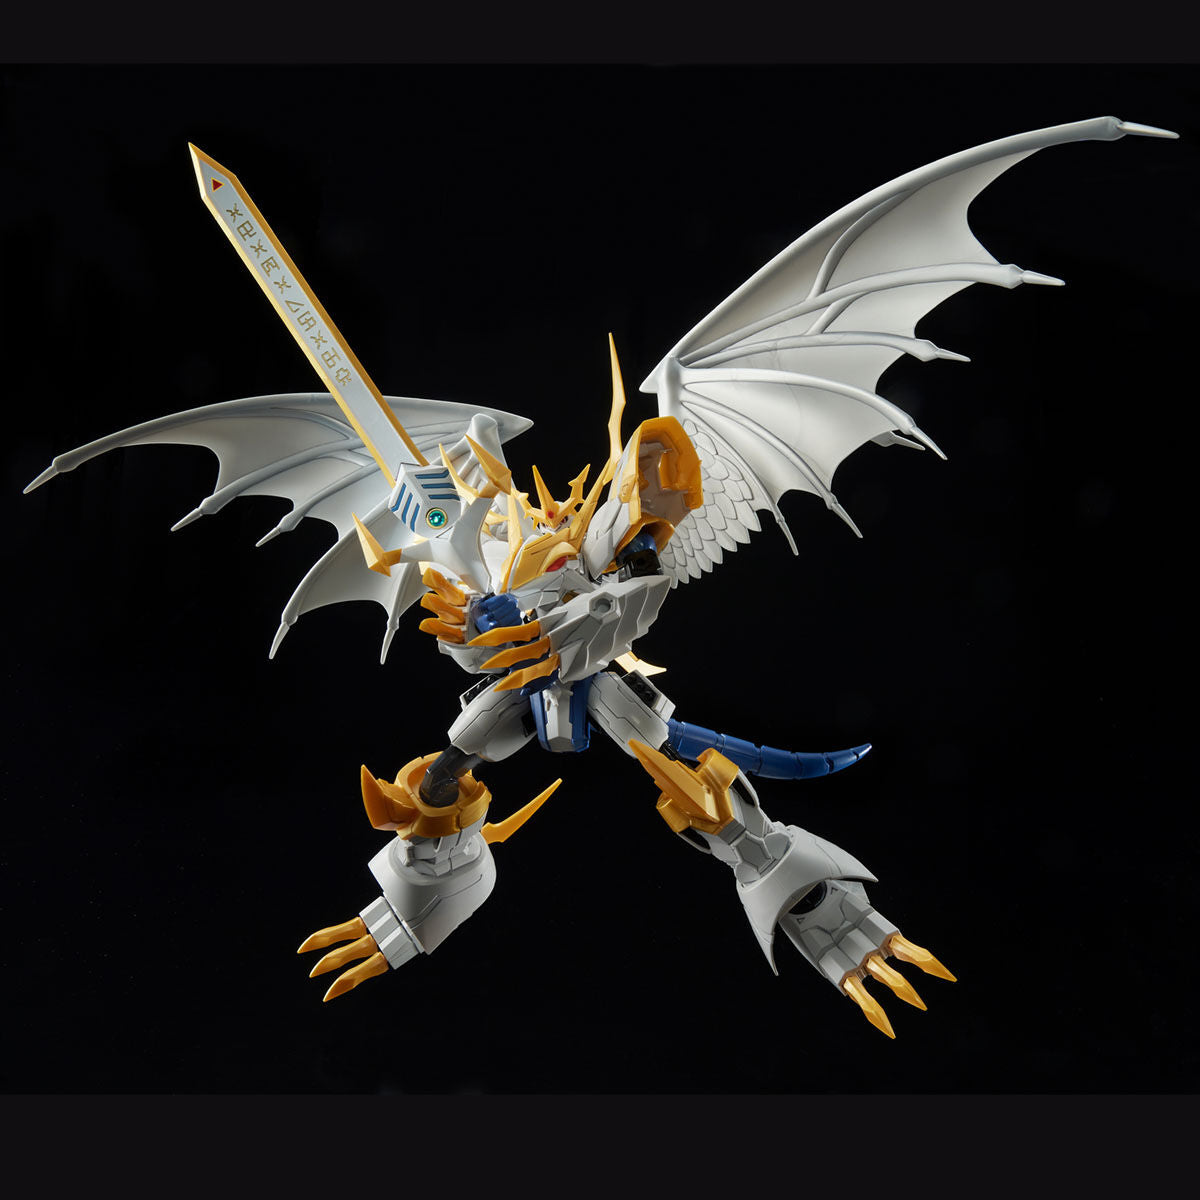 Digimon - Figure-Rise Standard - Amplified Imperialdramon Paladin Mode